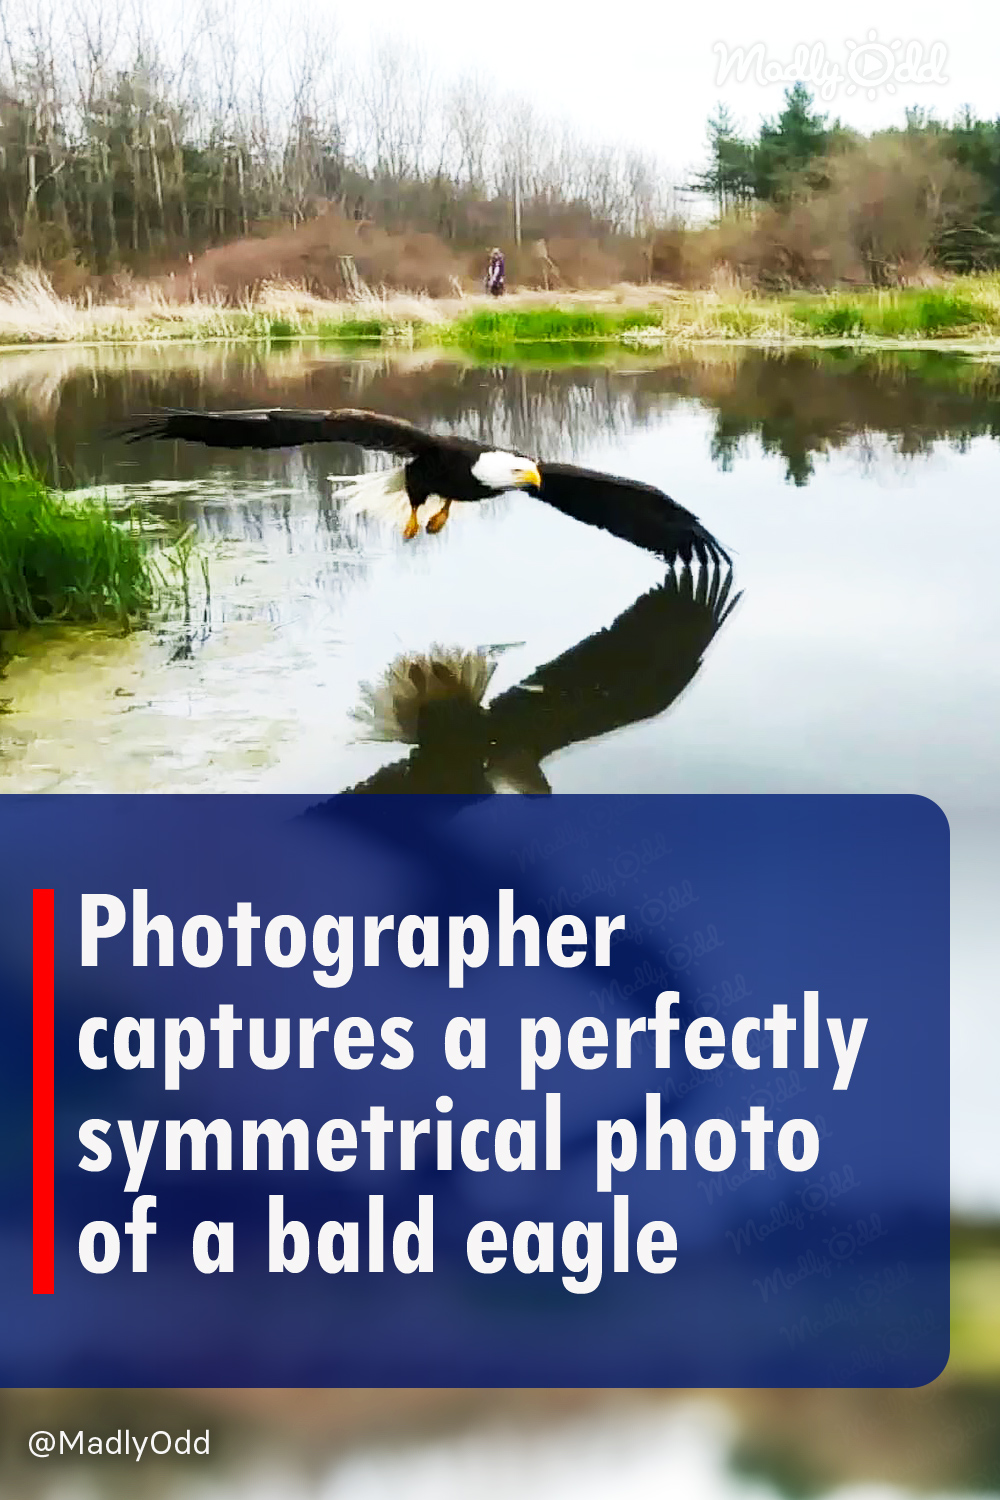 Photographer captures a perfect symmetrical photo of a bald eagle